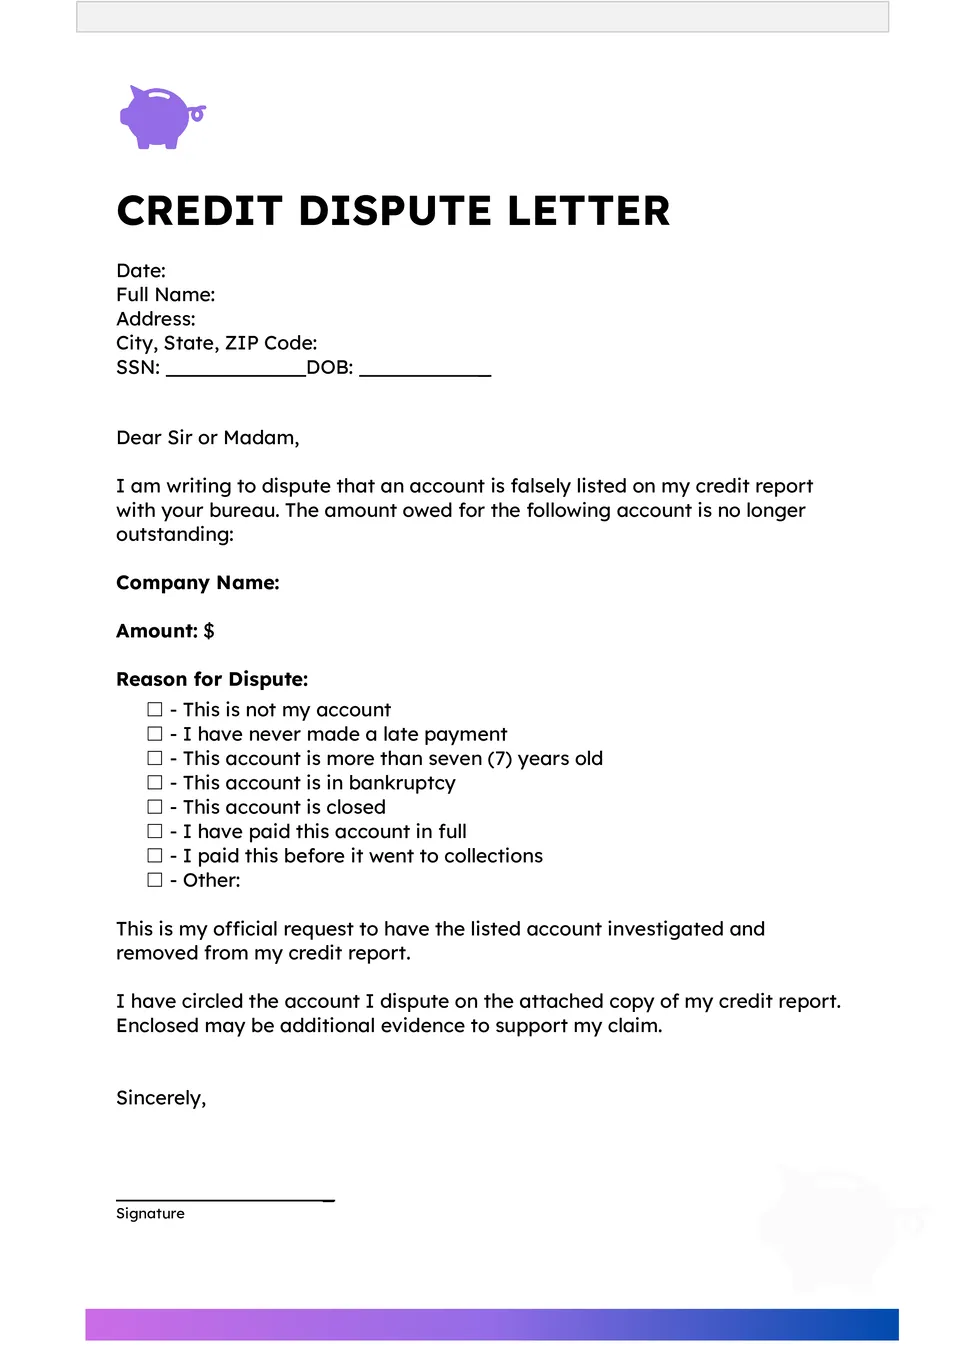 Credit Dispute Letter Template